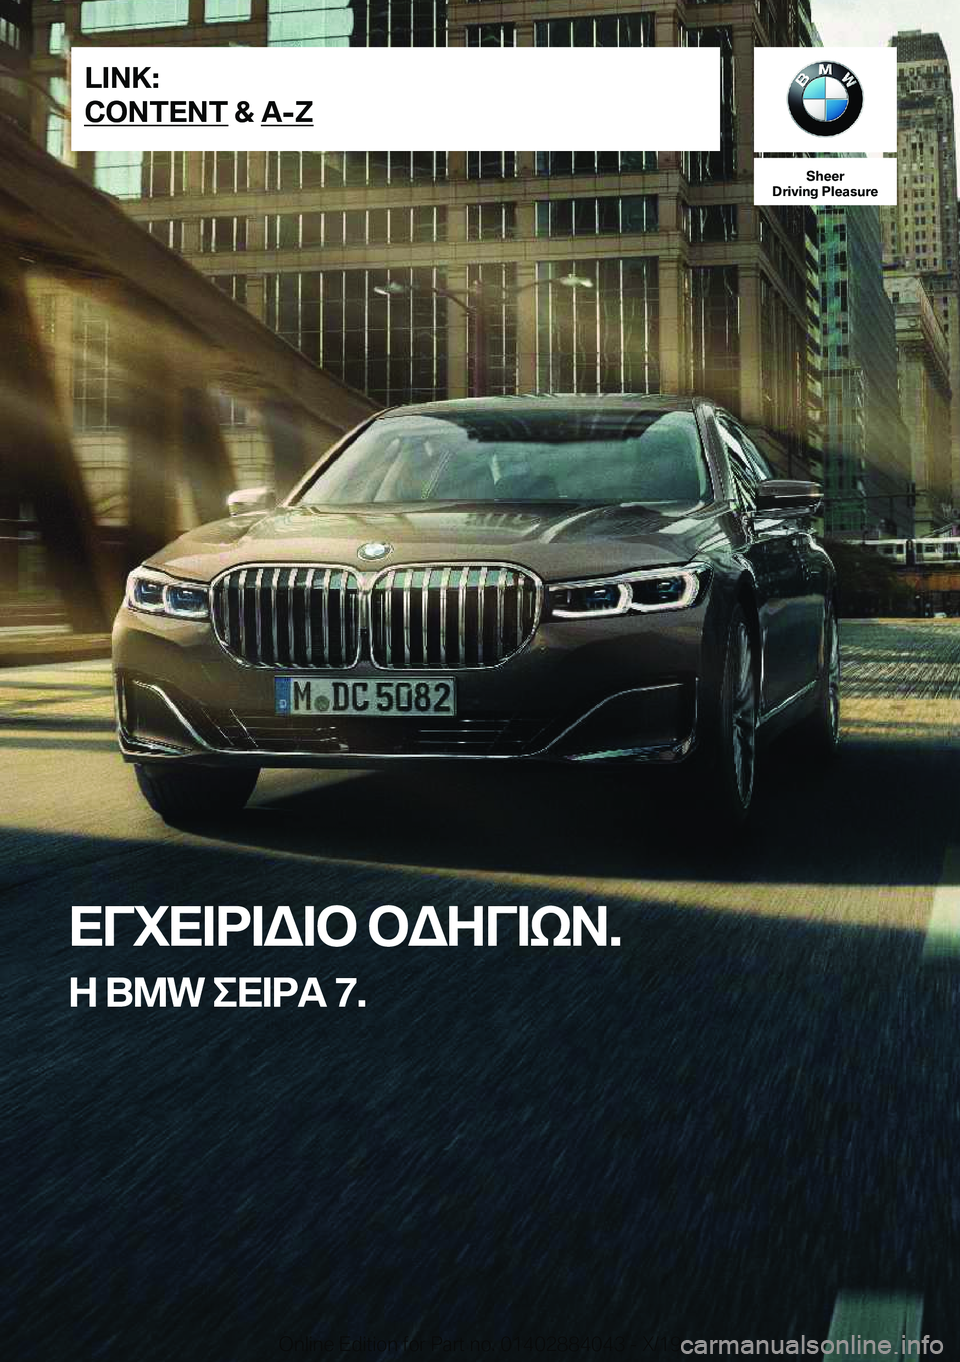 BMW 7 SERIES 2020  ΟΔΗΓΌΣ ΧΡΉΣΗΣ (in Greek) �S�h�e�e�r
�D�r�i�v�i�n�g��P�l�e�a�s�u�r�e
XViX=d=W=b�bWZV=kA�.
Z��B�M�W�eX=dT��7�.�L�I�N�K�:
�C�O�N�T�E�N�T��&��A�-�Z�O�n�l�i�n�e��E�d�i�t�i�o�n��f�o�r��P�a�r�t��n�o